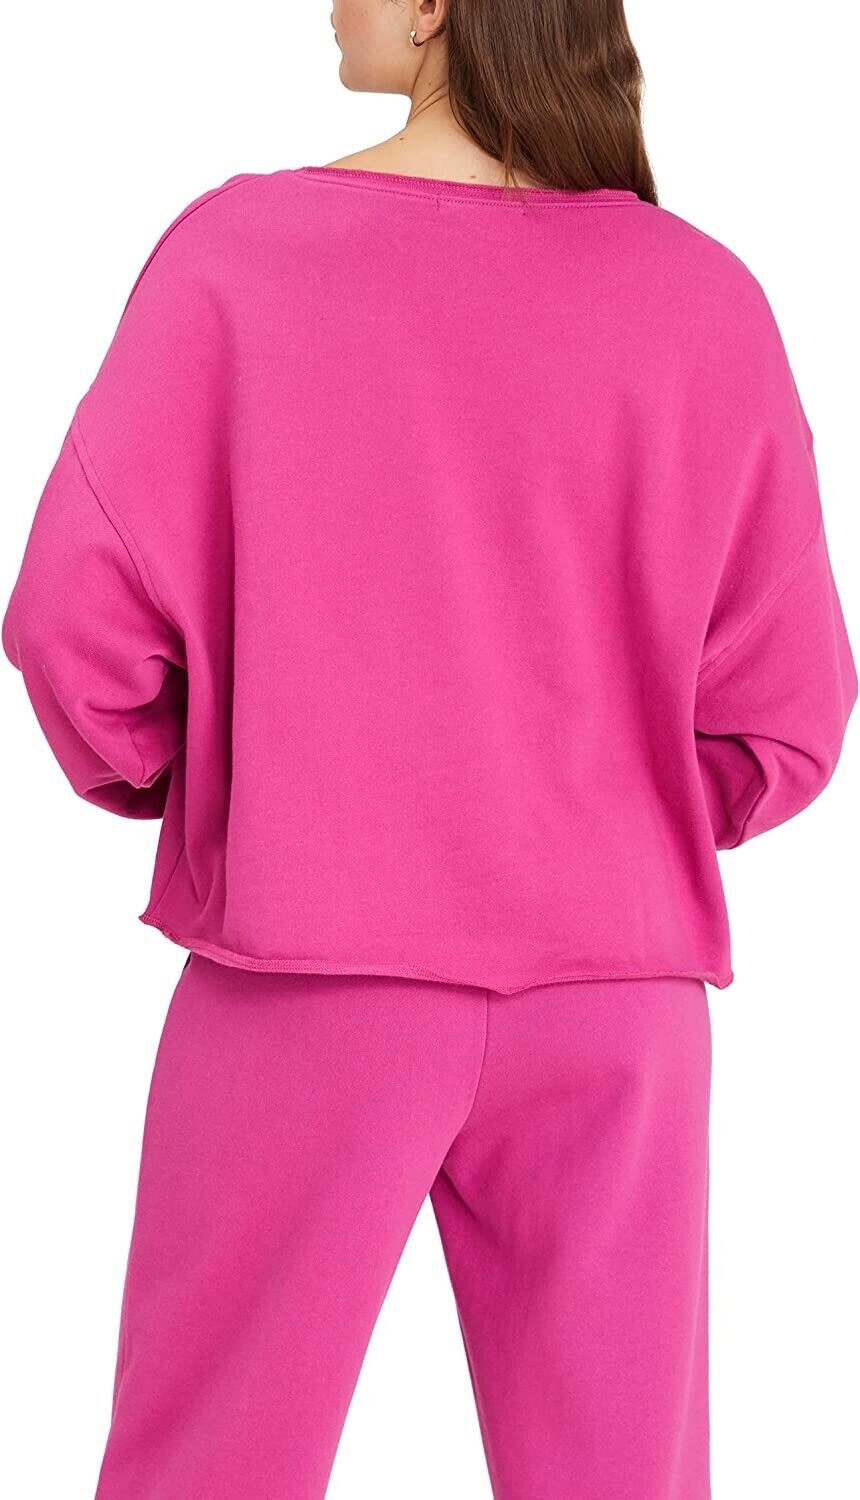 Sanctuary Perfect Long Sleeves Sweatshirt for Women L/XL